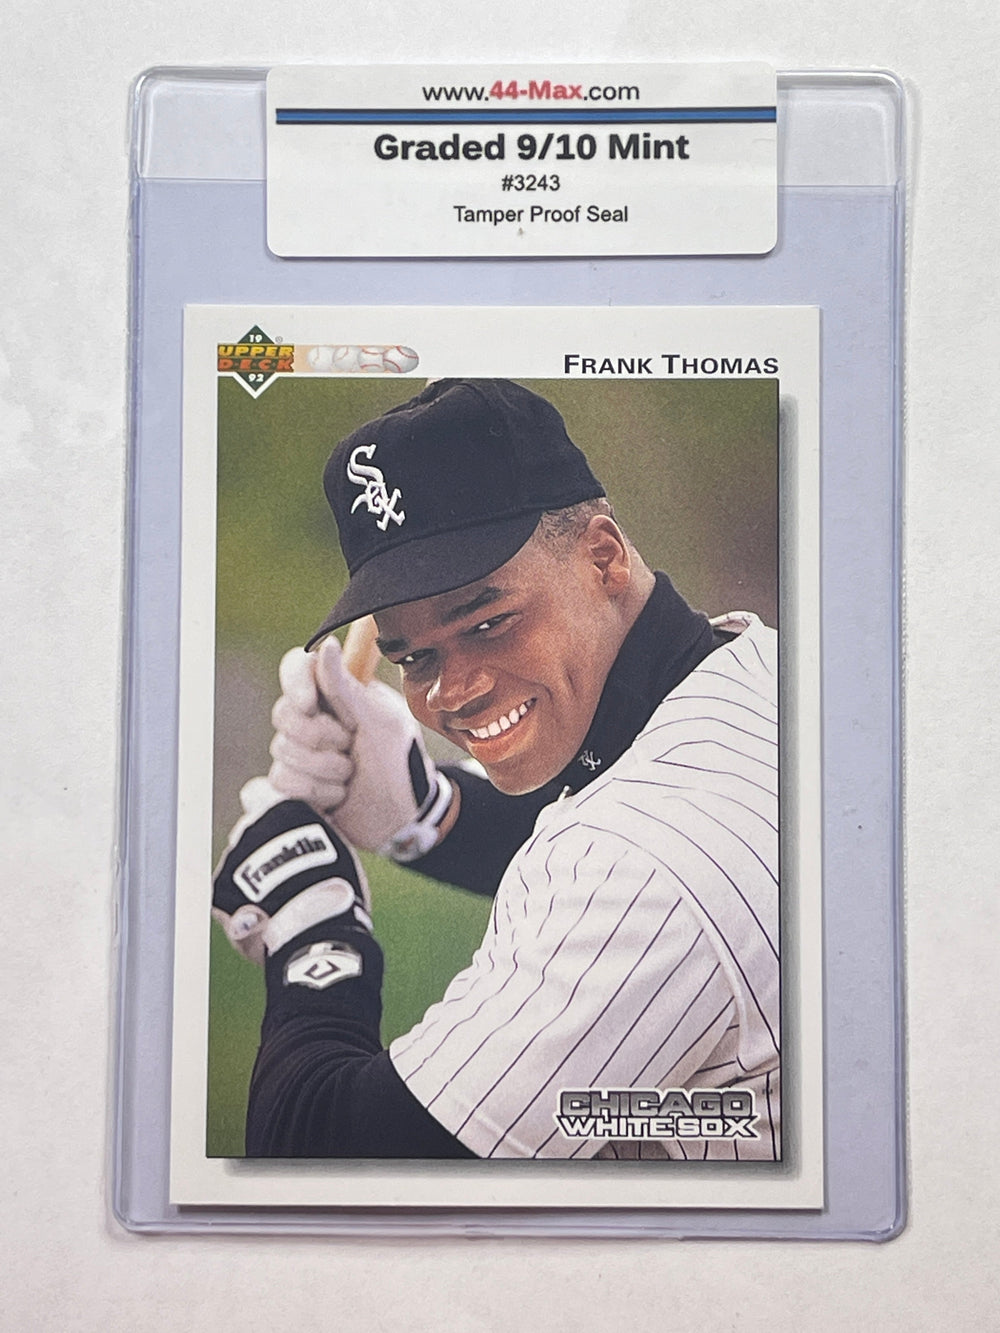 Frank Thomas 1992 Upper Deck Baseball Card. 44-Max 9/10 MINT #3243